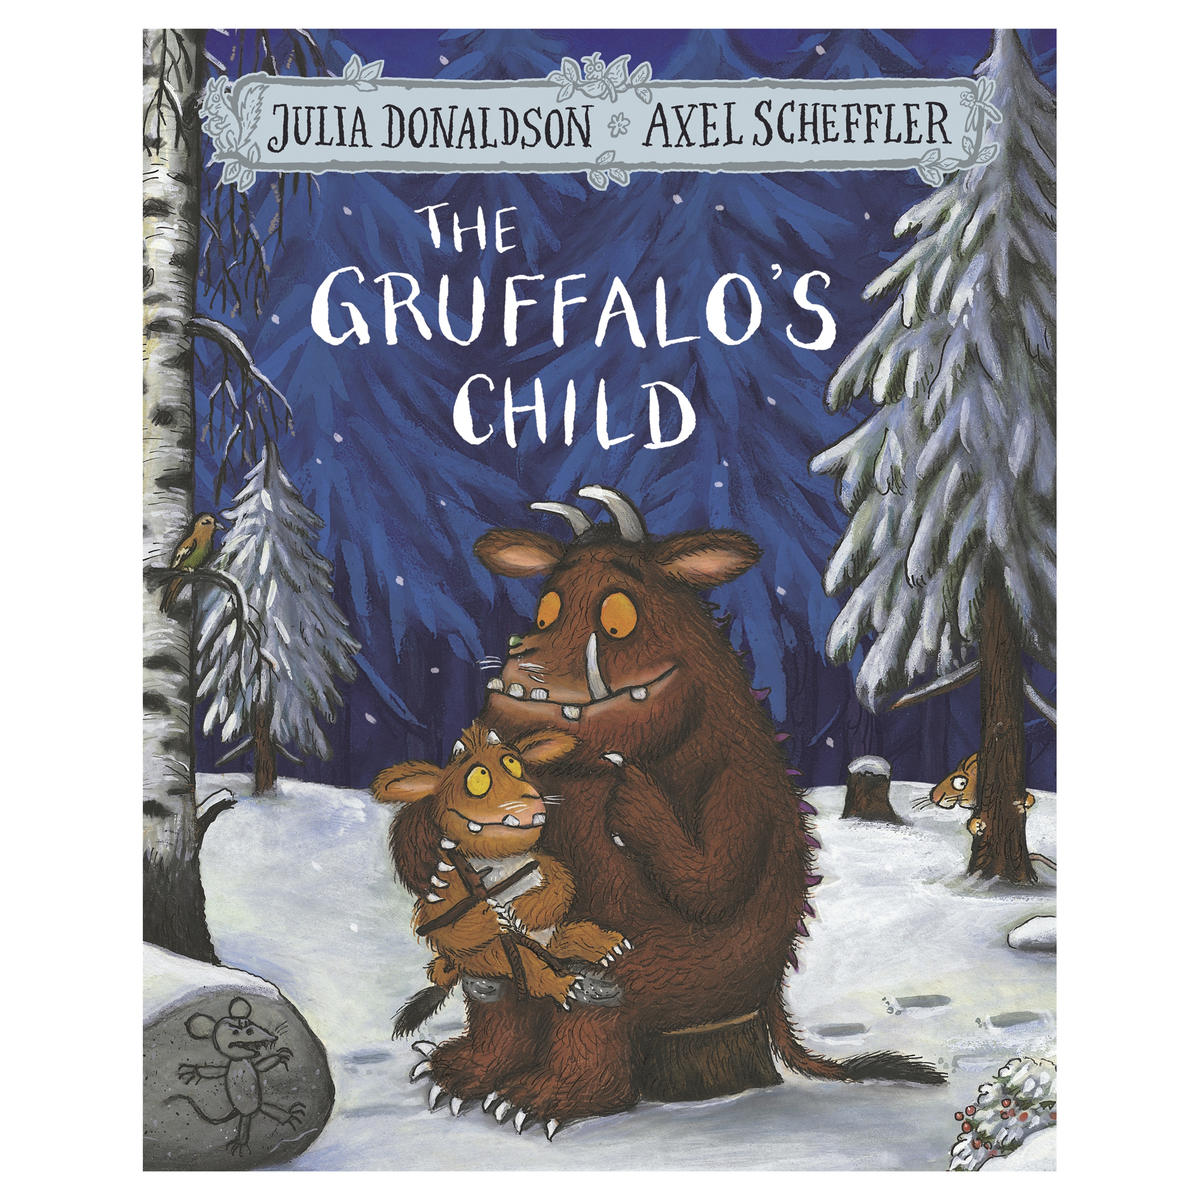 The Gruffalo's Child by Julia Donaldson and Axel Scheffler - Book